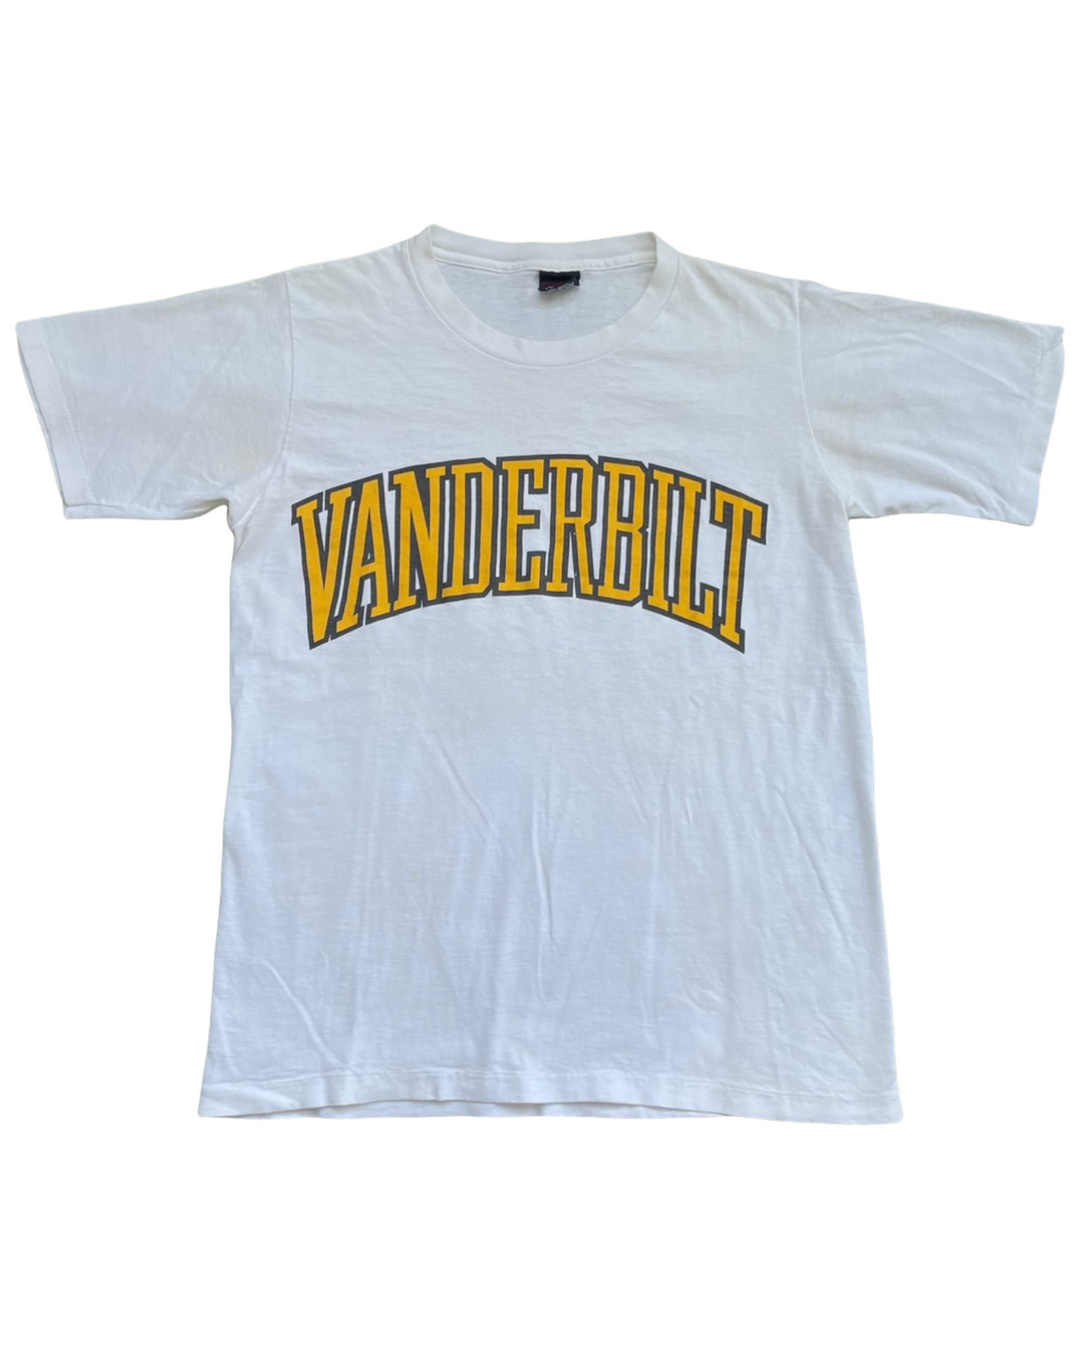 Vanderbilt Vintage T-Shirt